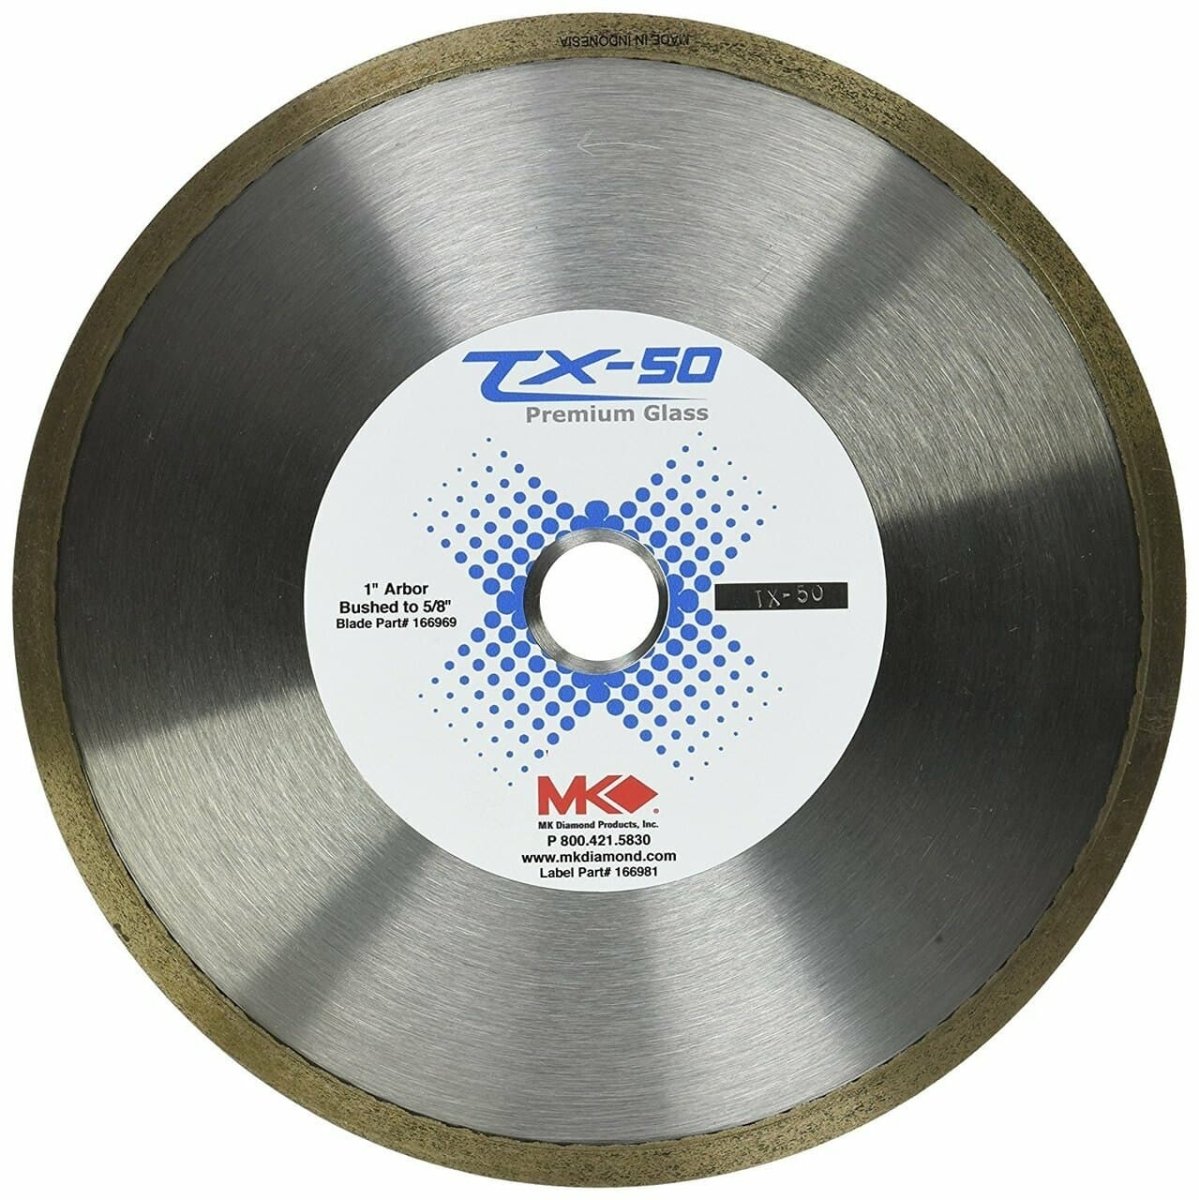 MK Diamond 10 x 3 Vinyl Scraper Blade #167619